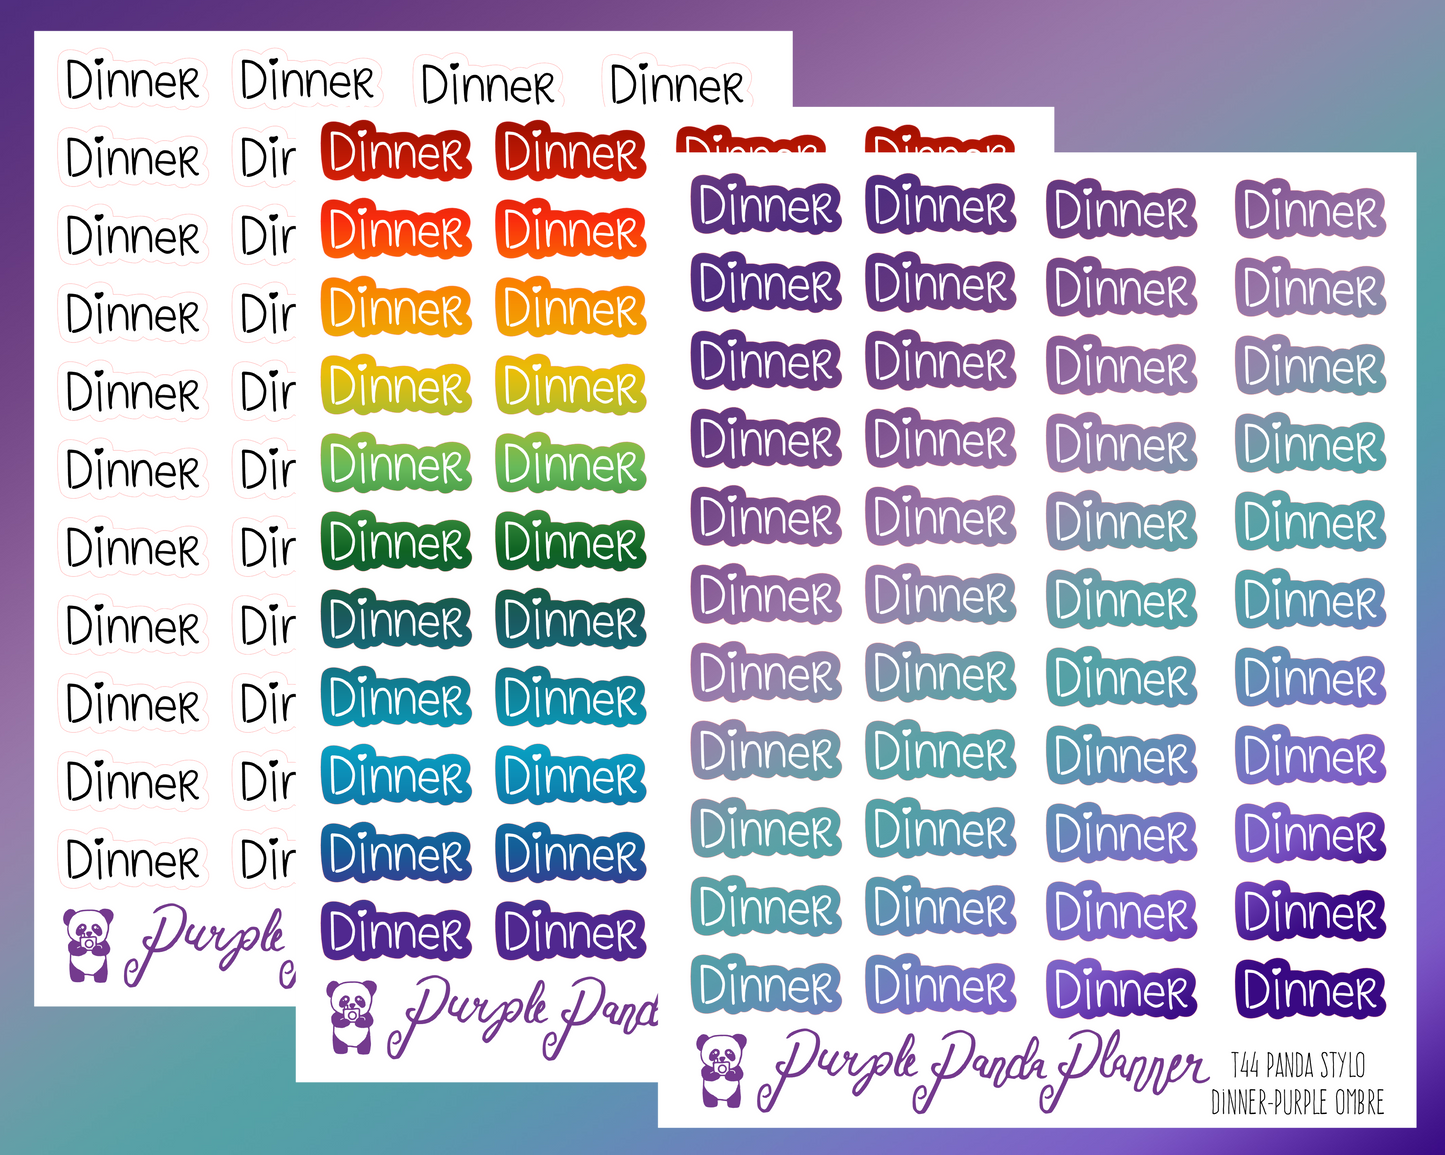 Dinner (T44) - Panda Stylo Script - Black, Rainbow, or Purple Ombre - Stickers for Planner, Journal or Calendar